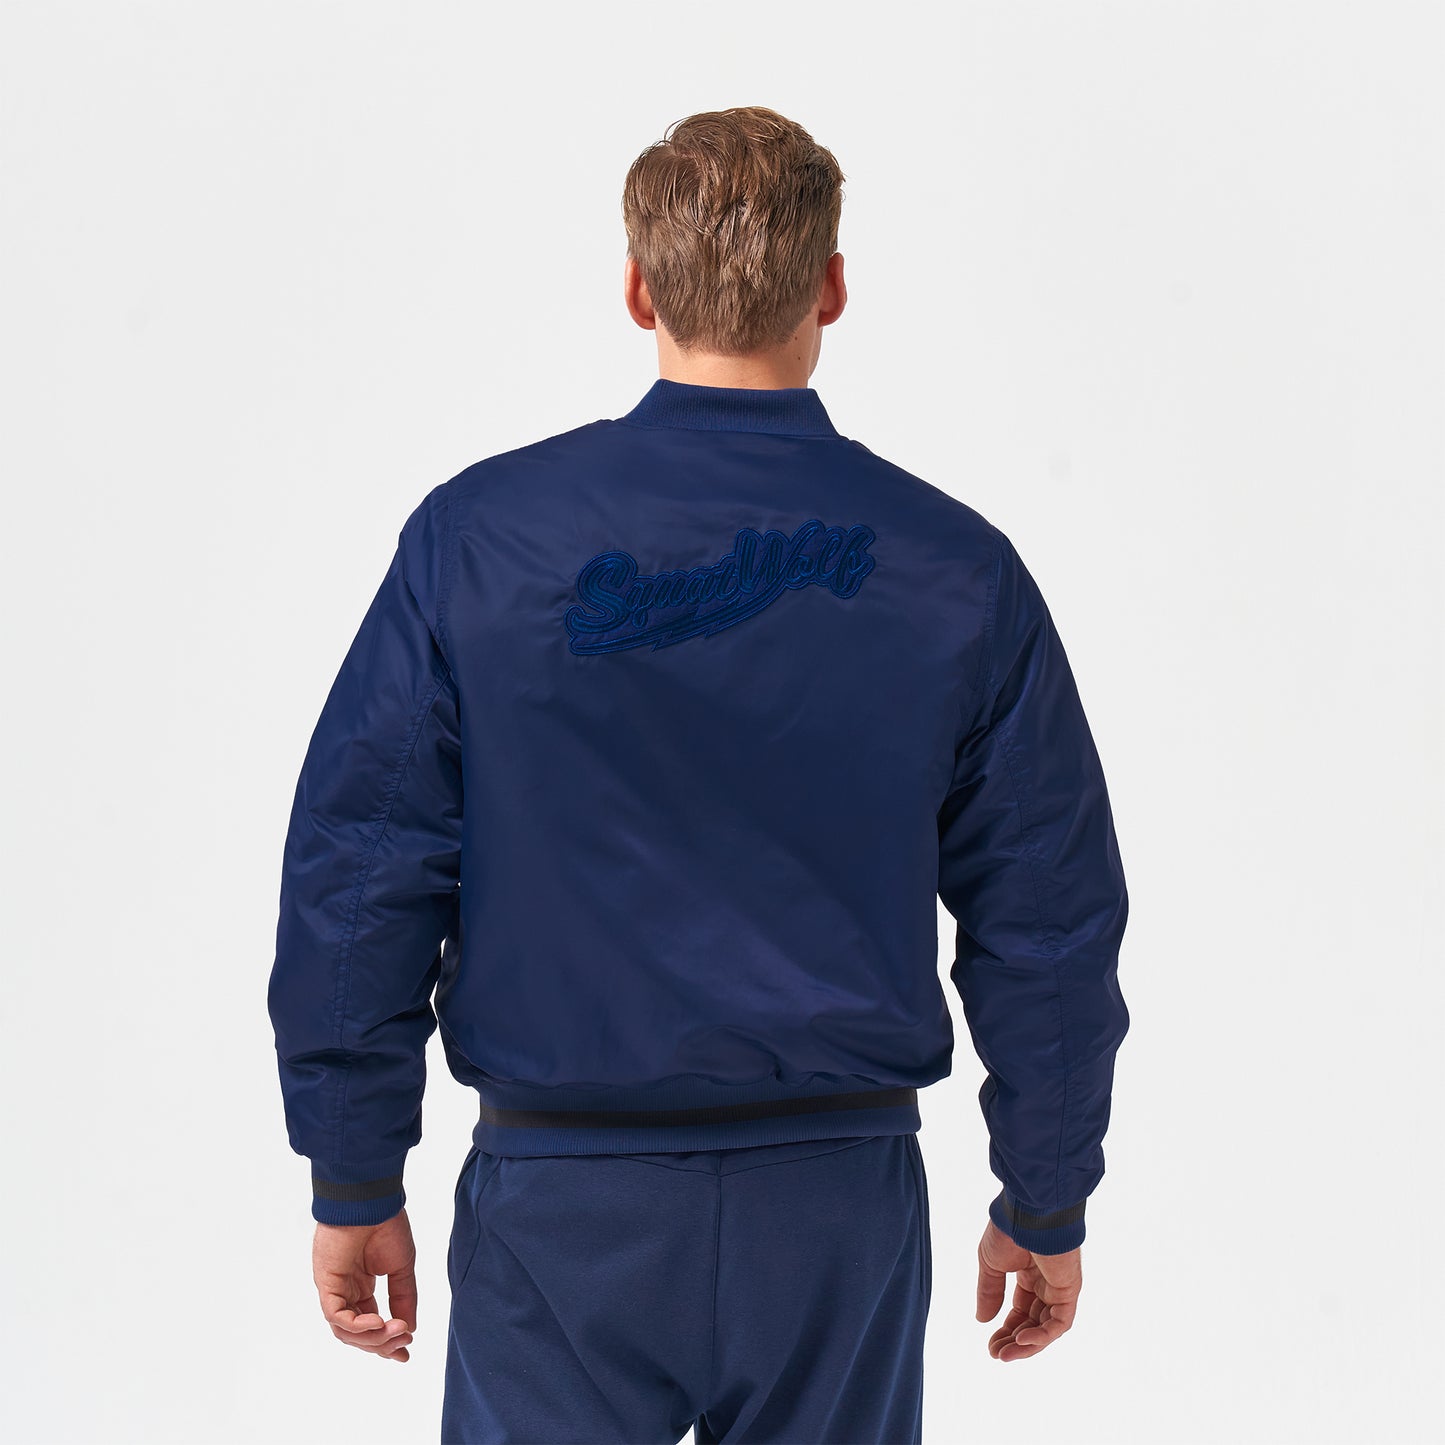 squatwolf-gym-wear-golden-era-bomber-jacket-blue-workout-tops-for-men